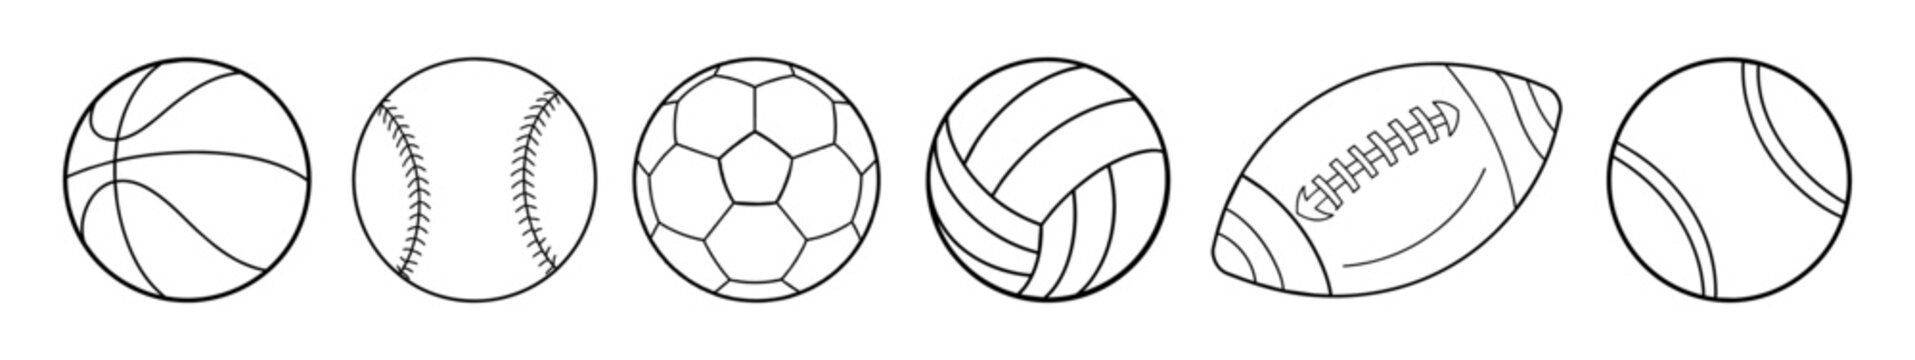 Sport balls set. Ball icons. Balls for Football, Soccer, Basketball, Tennis, Baseball, Volleyball. Vector illustration